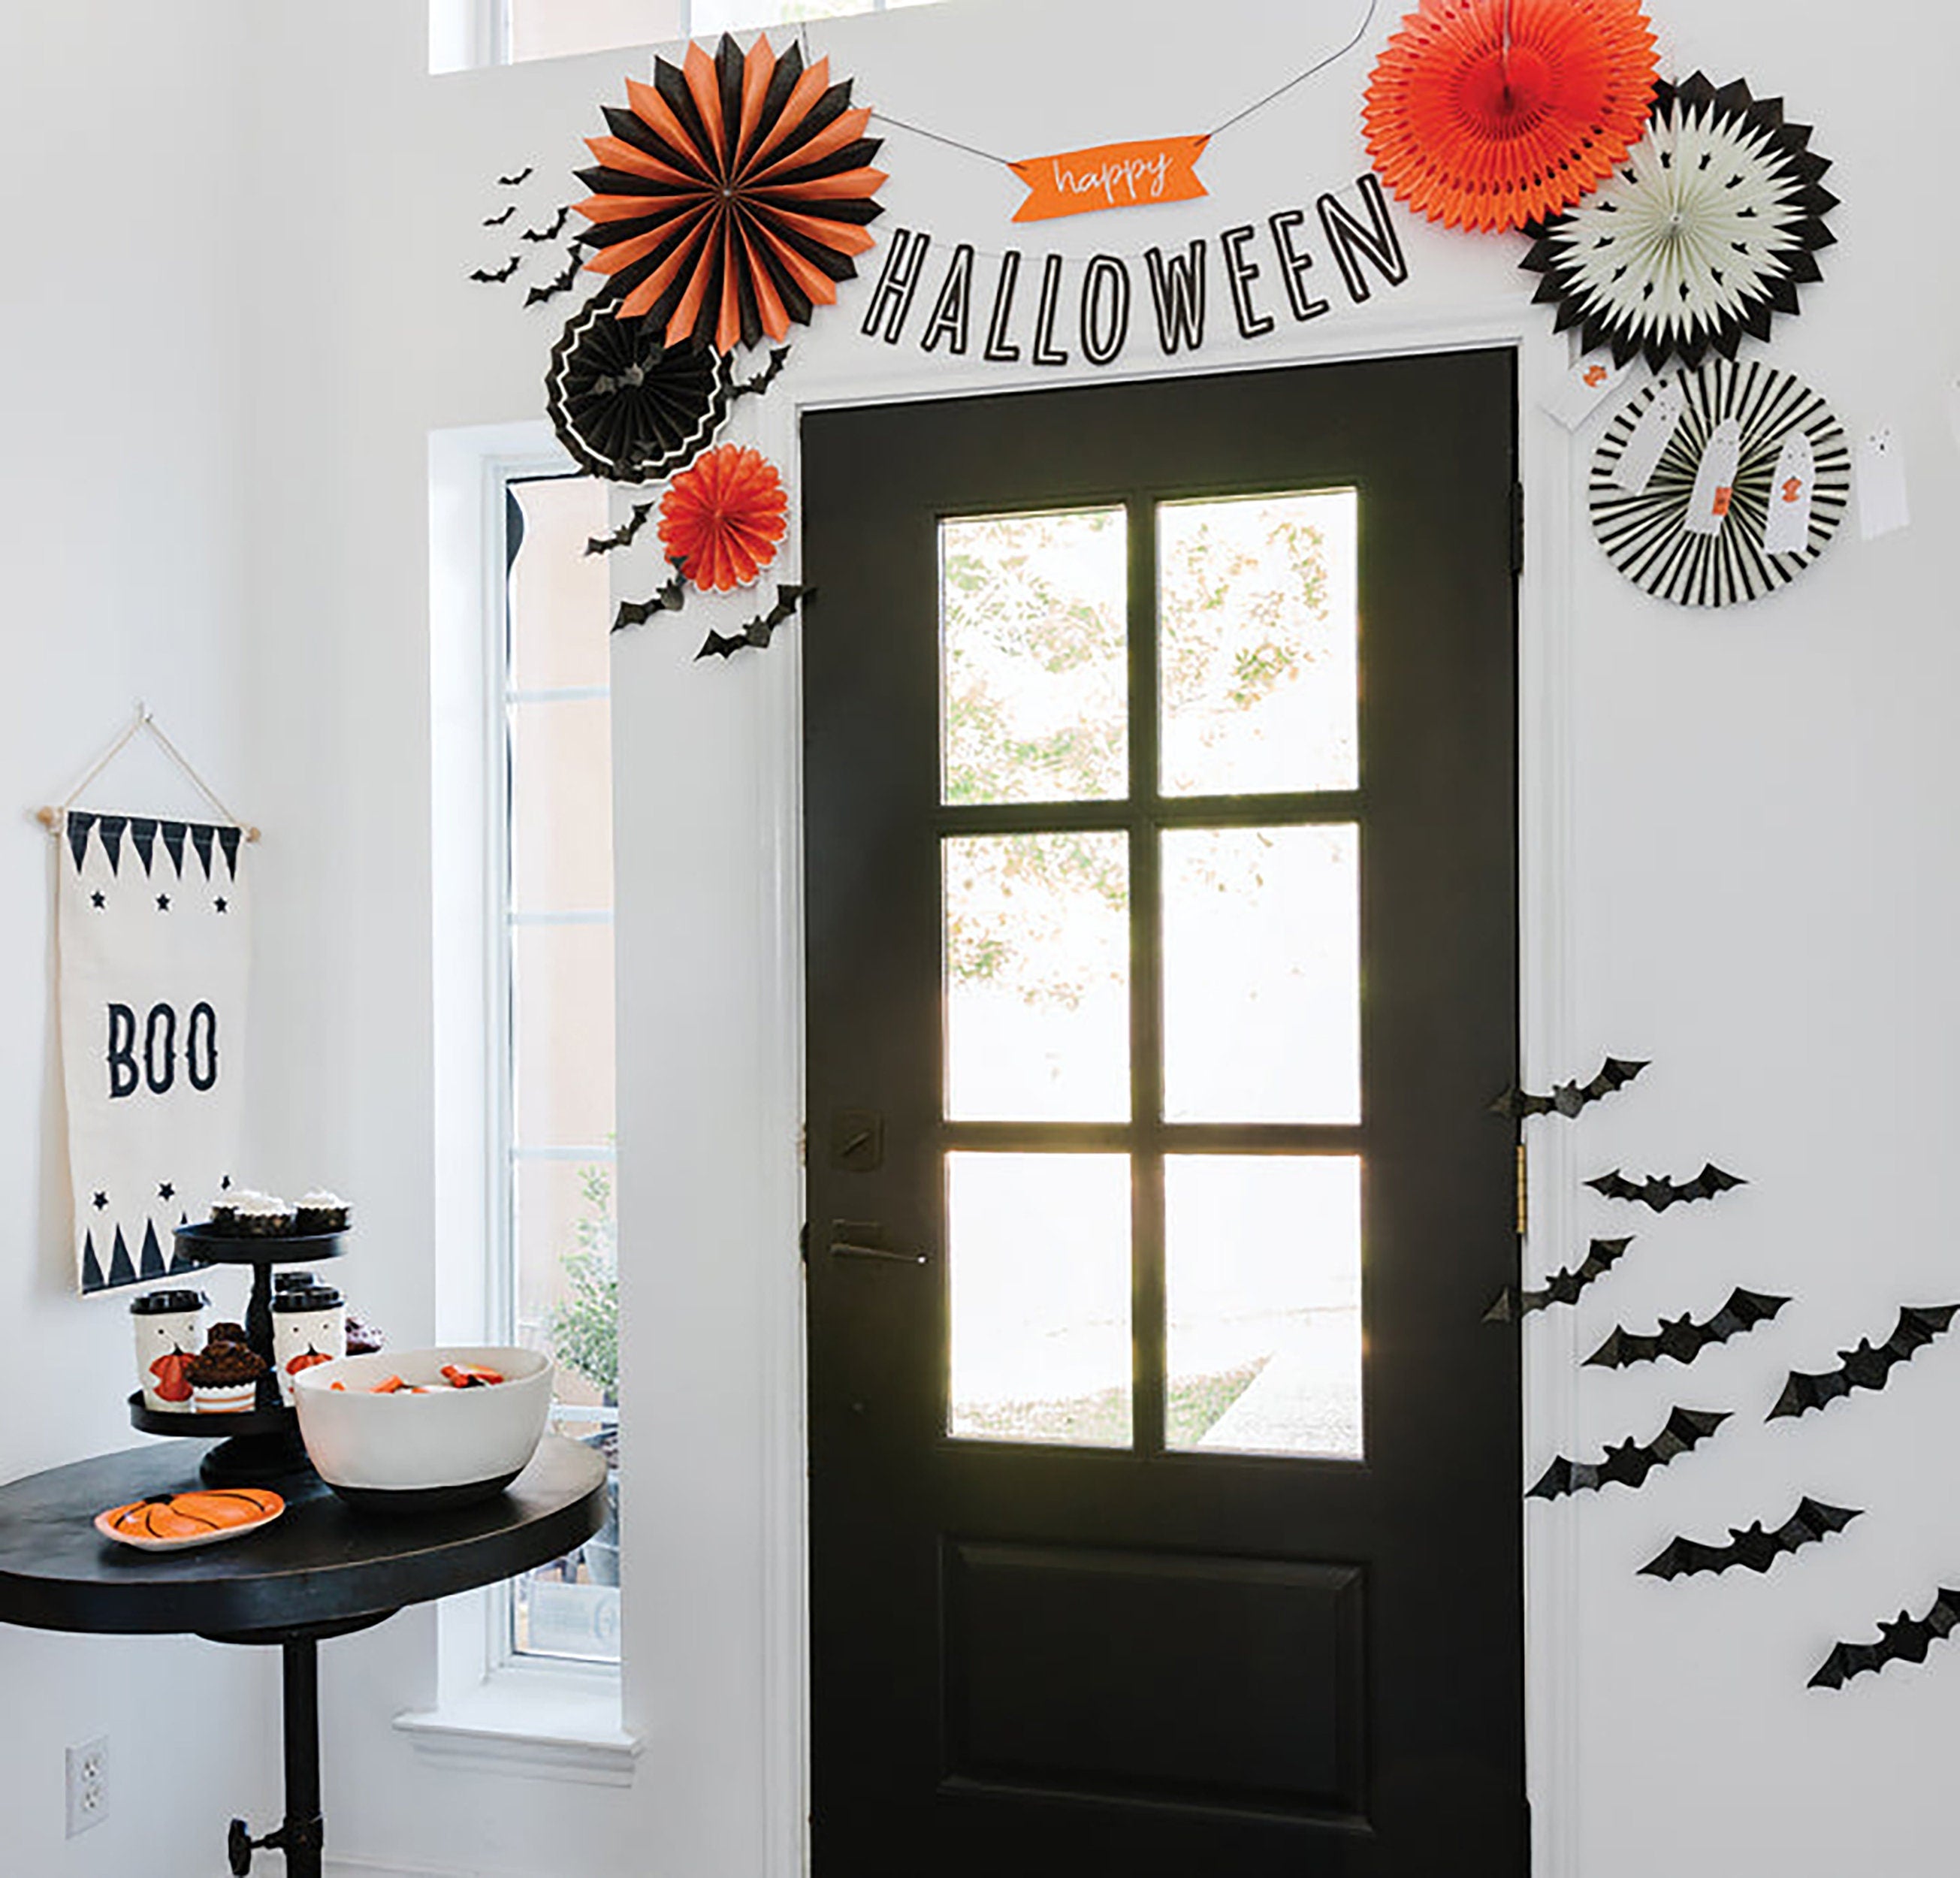 Happy Halloween Banner | Halloween Party Banner - Halloween Banner - Halloween Mantel Decor - Halloween Party Decorations - Halloween Supply